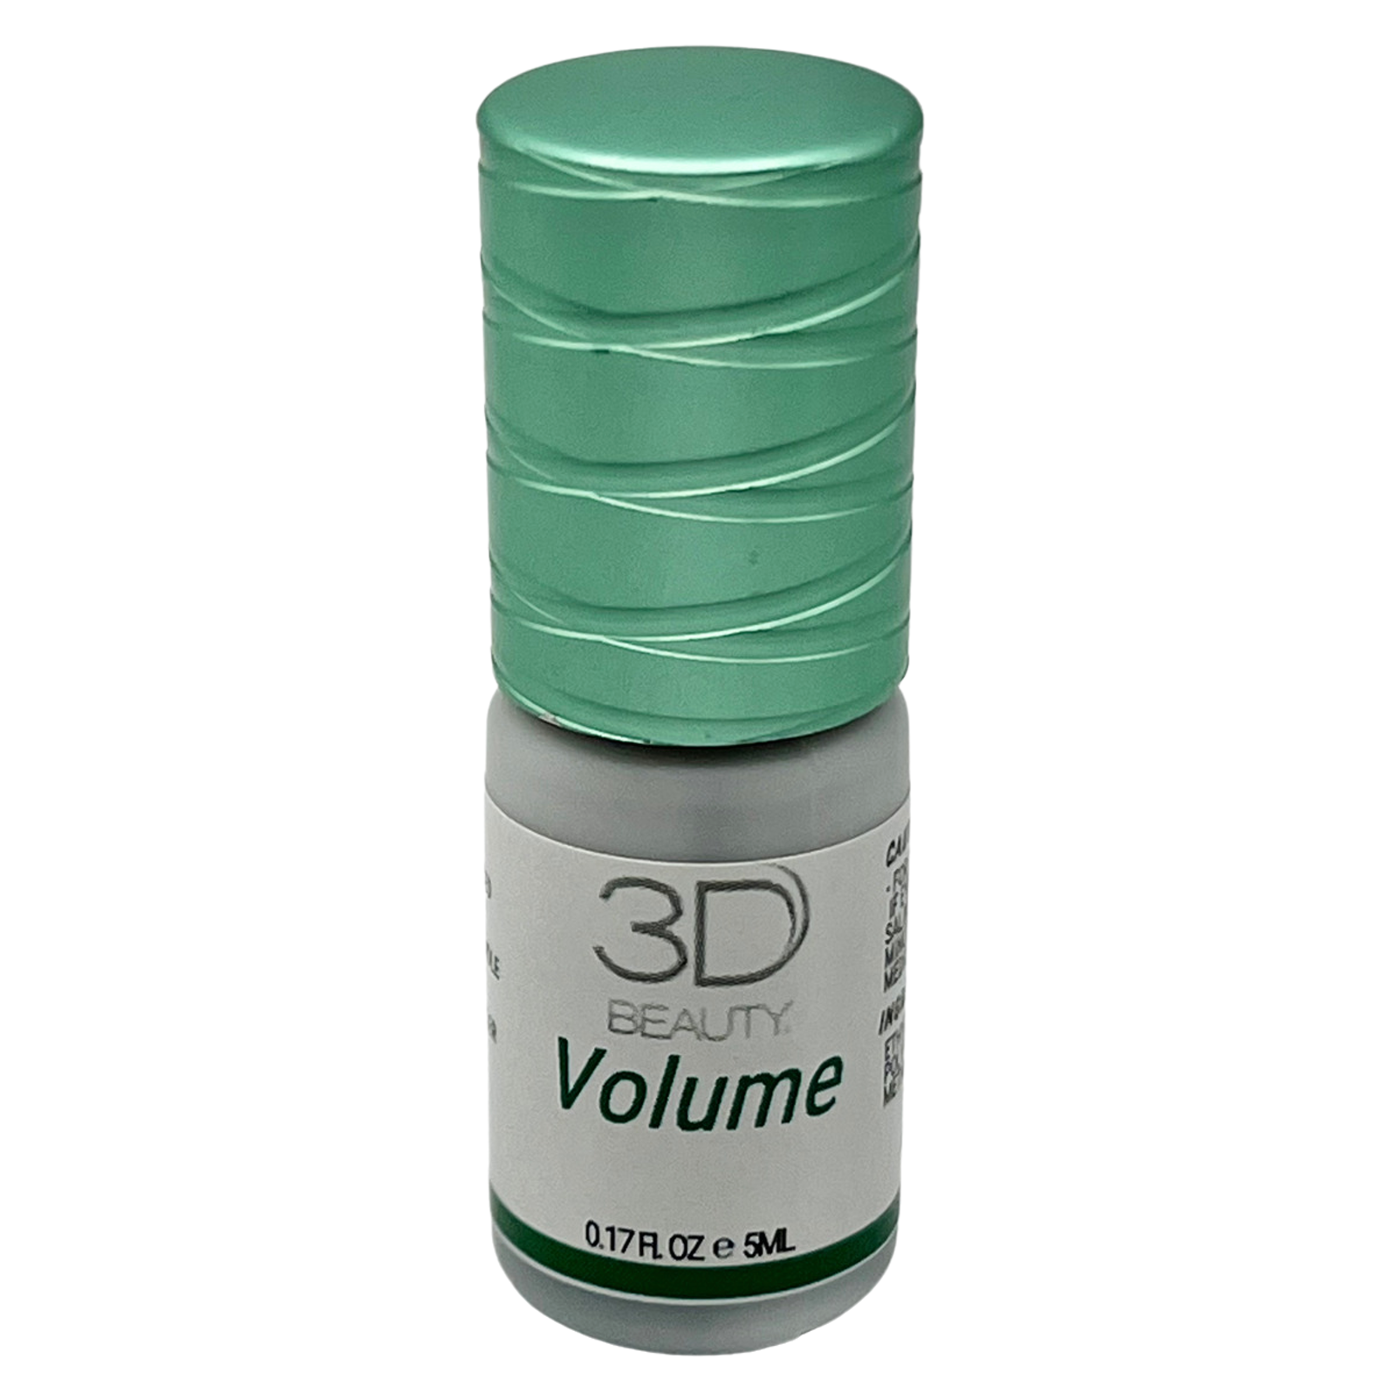 Volume Lash Adhesive